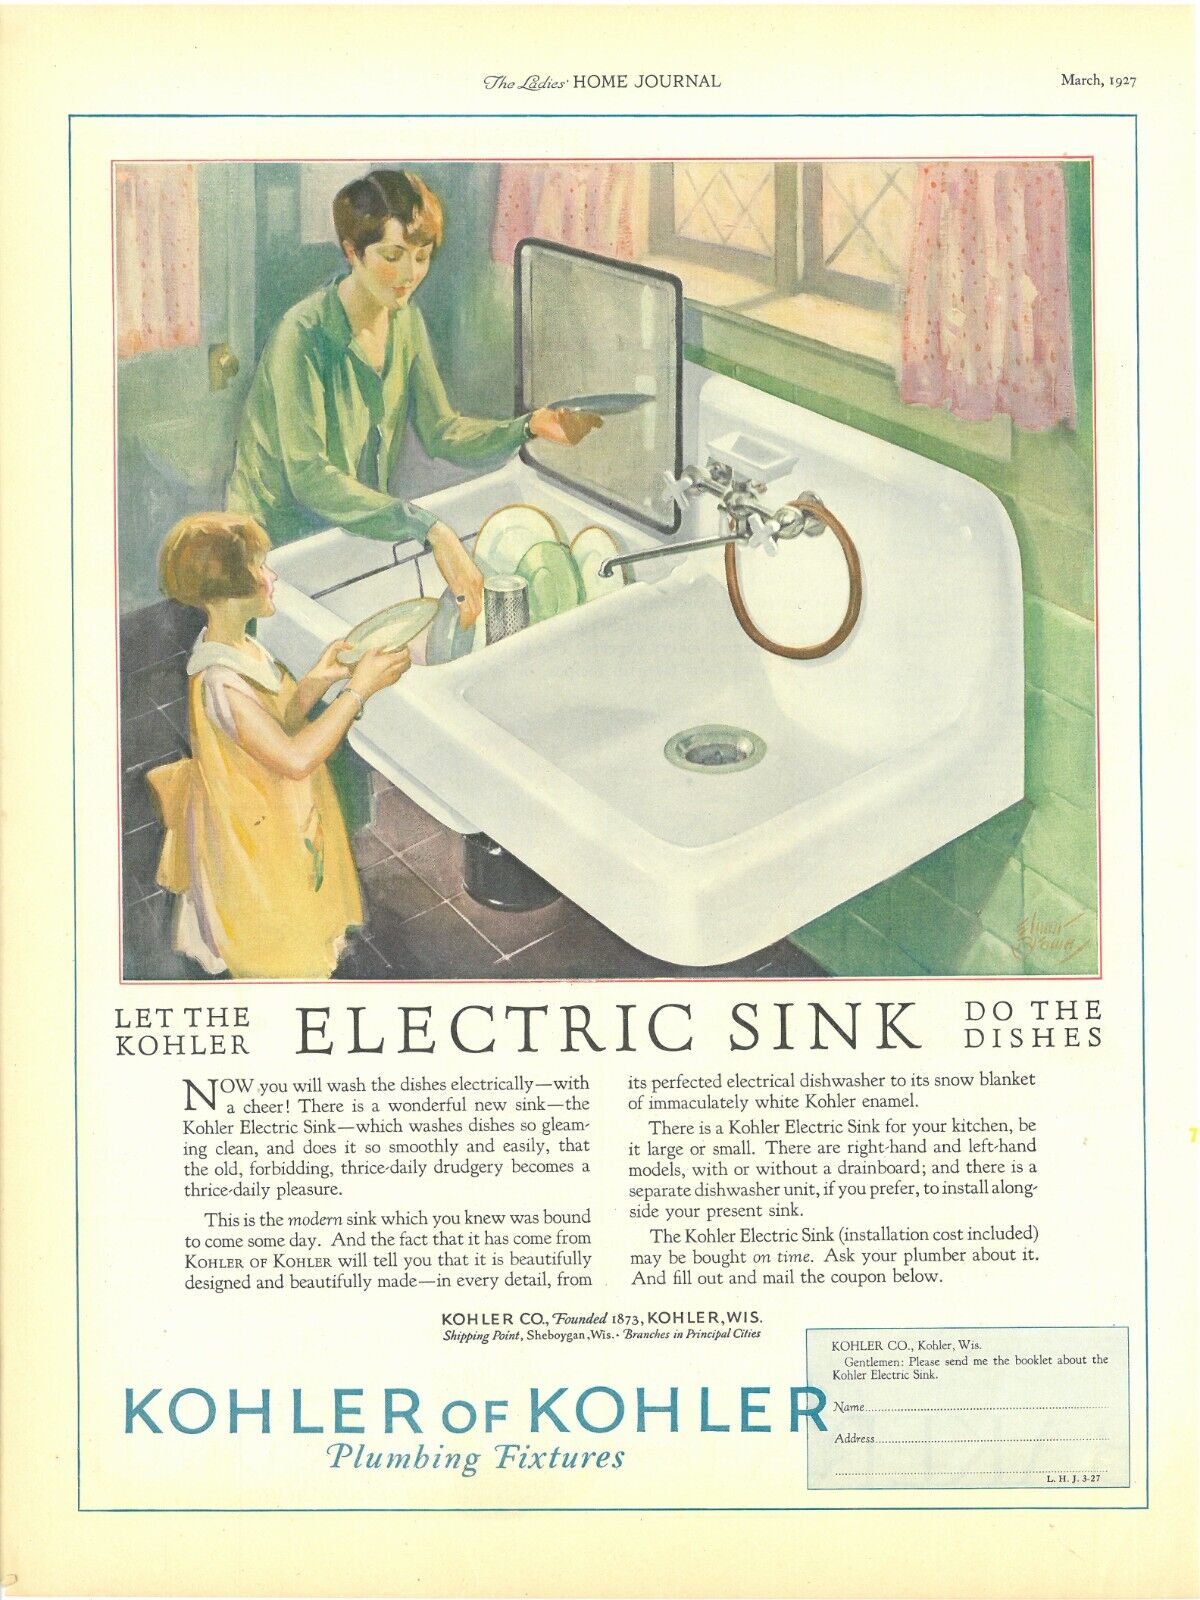 Print Ad Kohler Electric Sink Plumbing Dishes Elmore Brown Art Full Page 1927